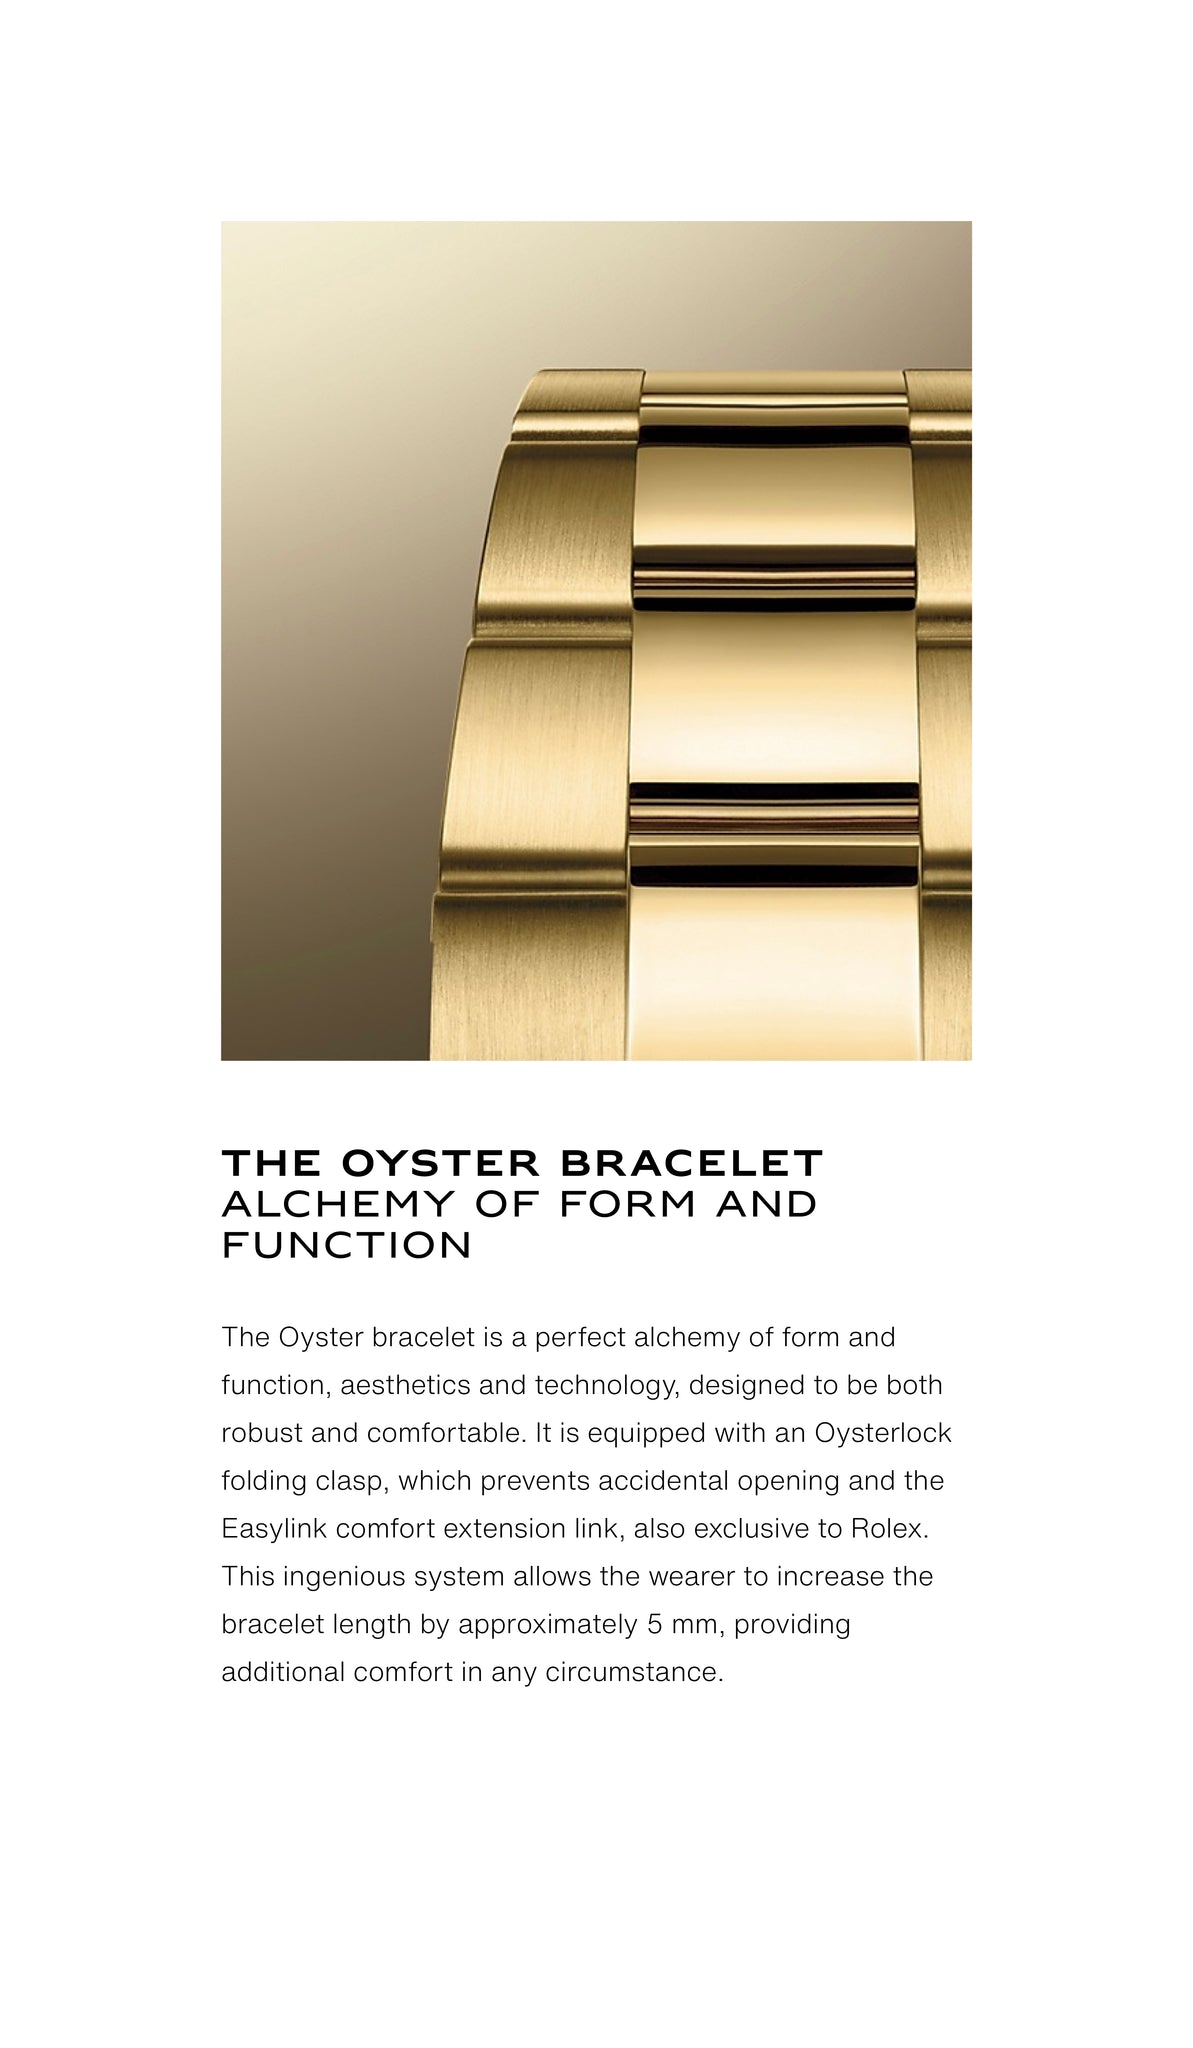 Rolex Yacht-Master in Gold, m116688-0002